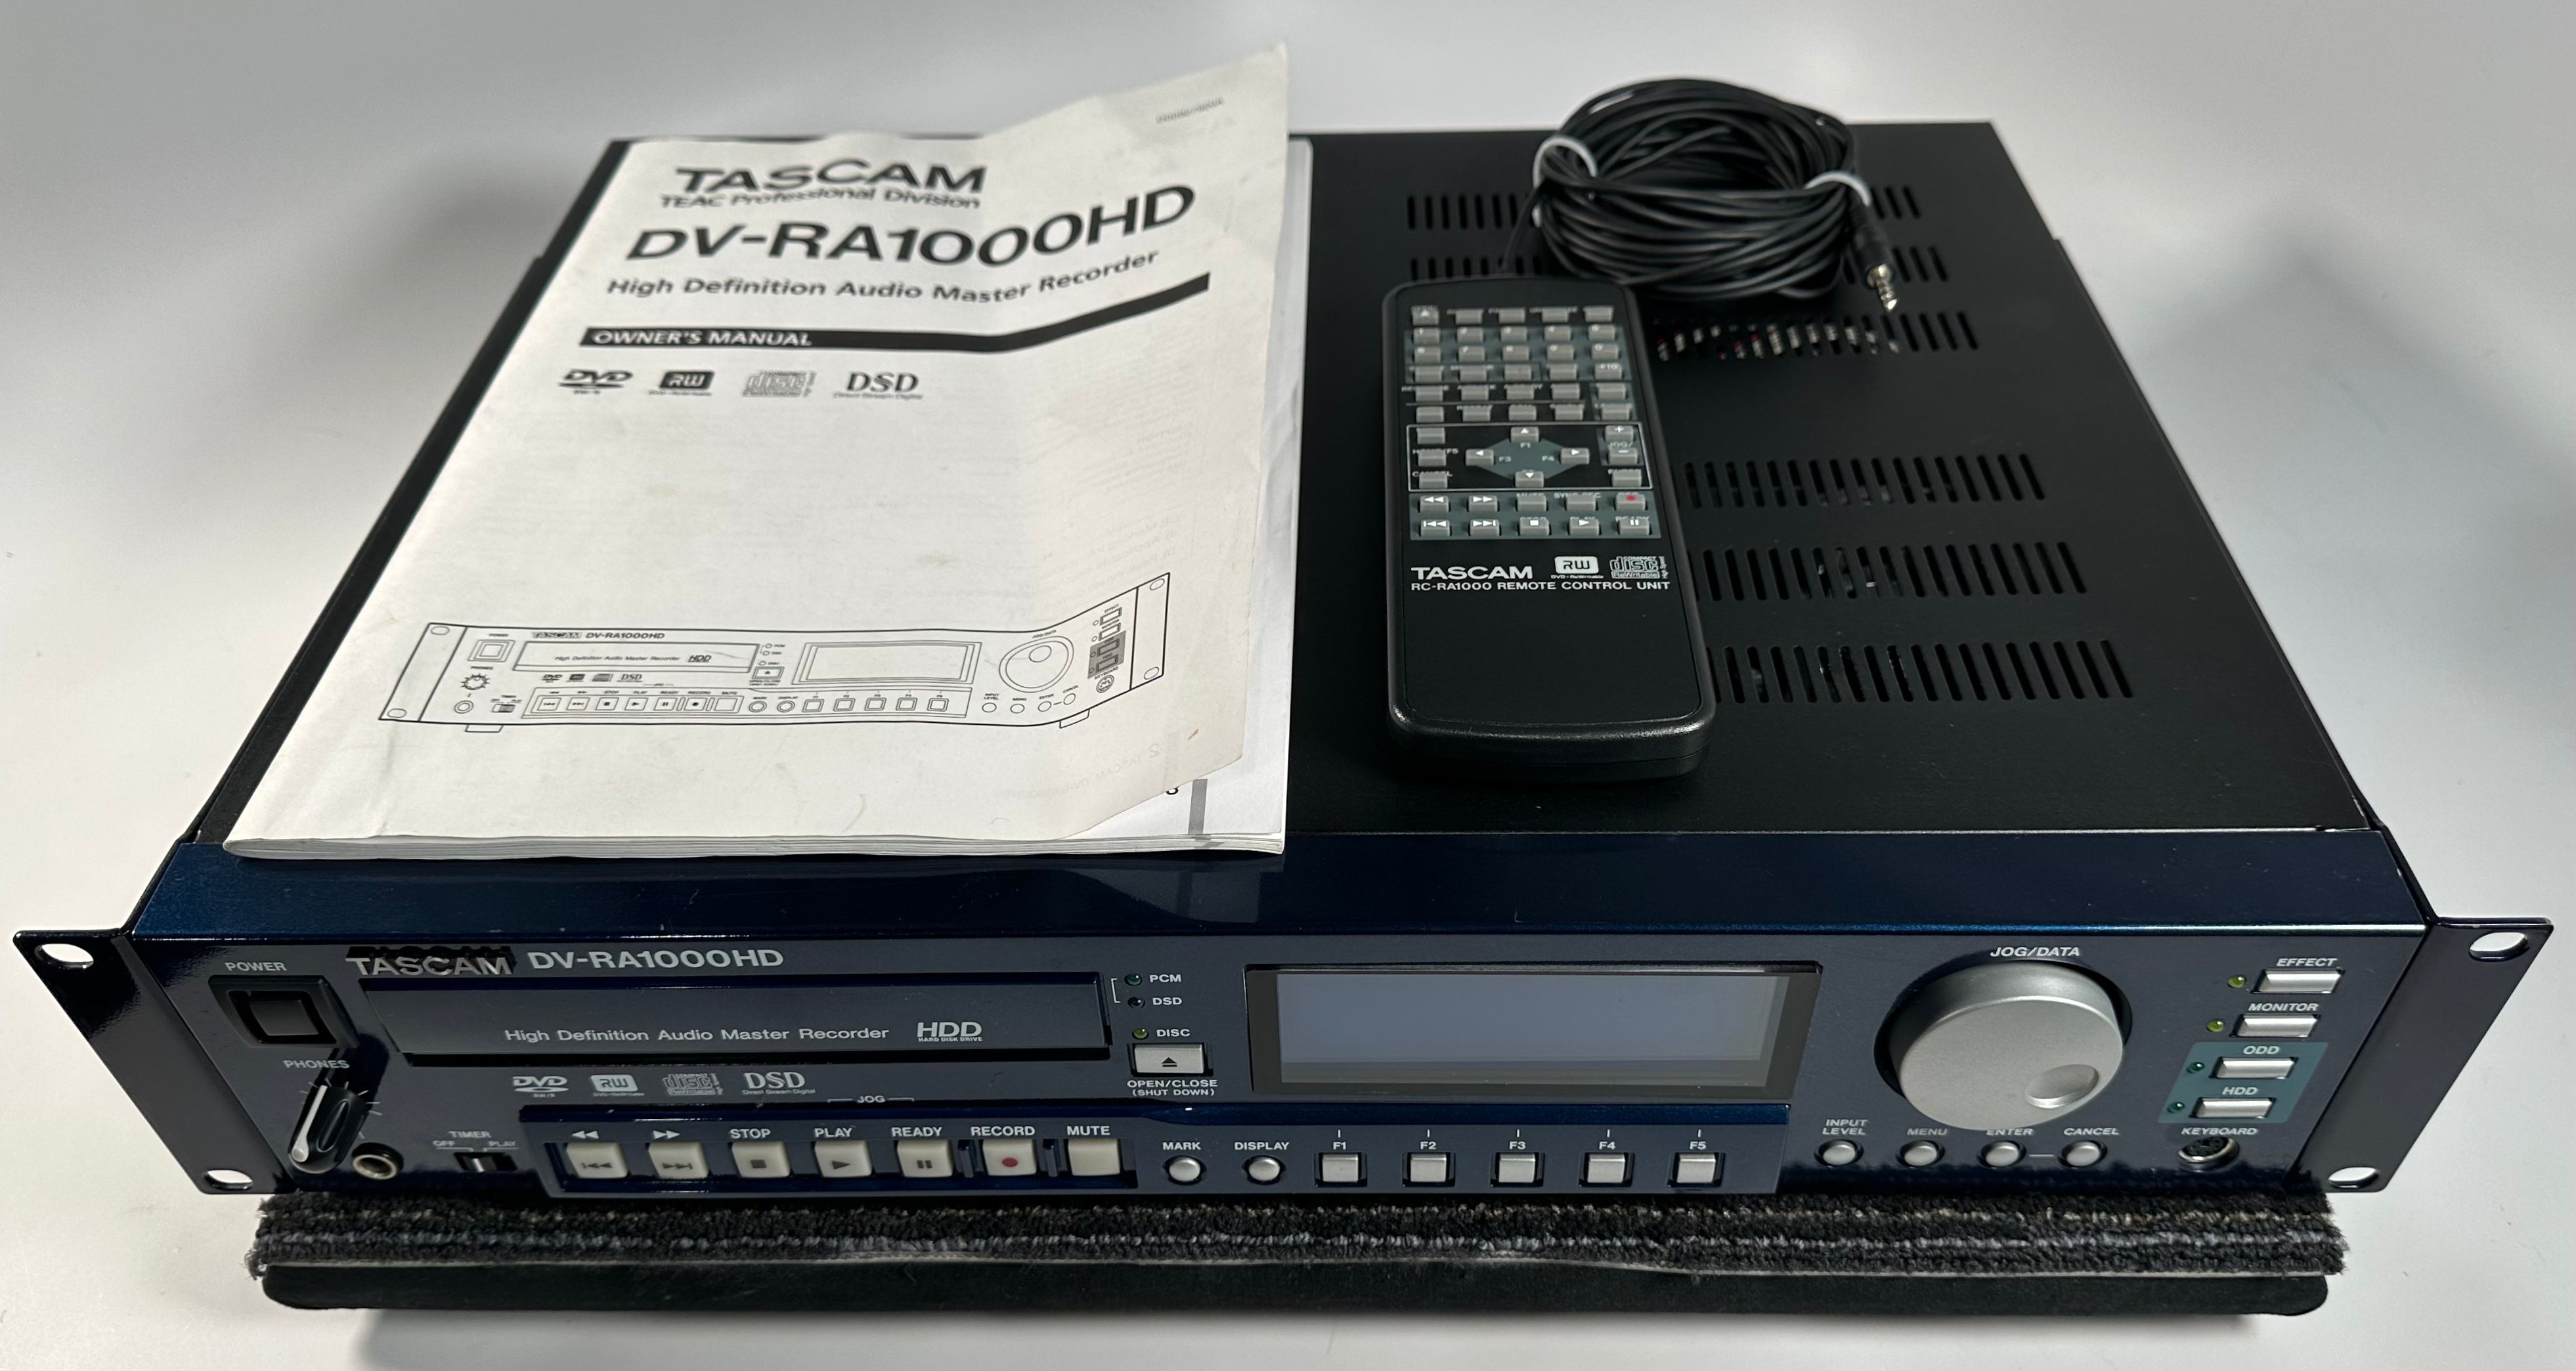 Tascam DV-RA1000HD Digital Audio Master Recorder w/Remote 